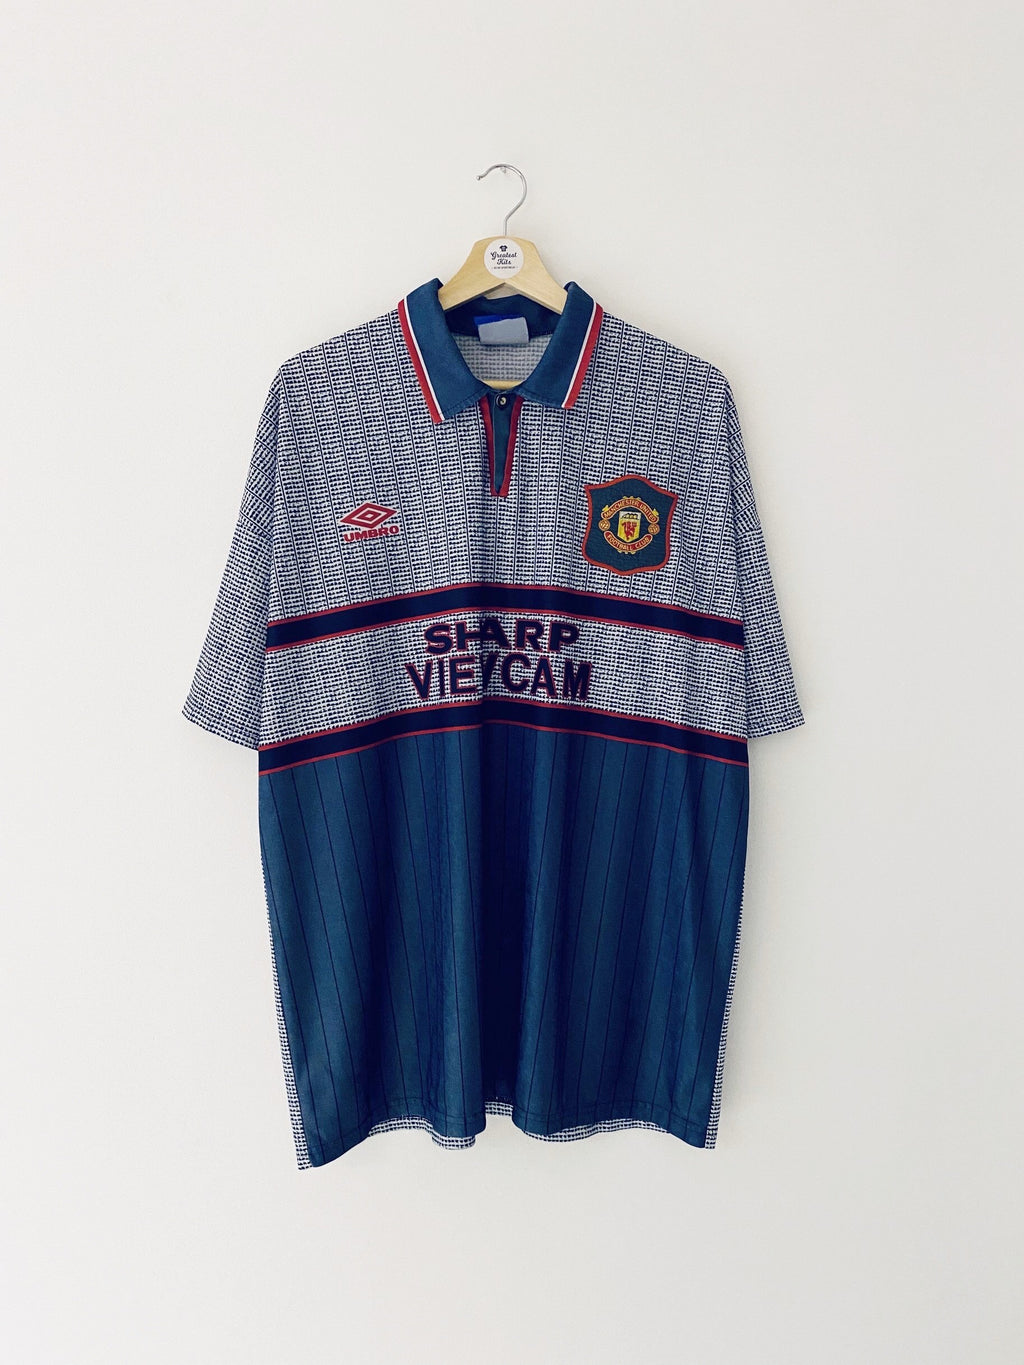 Maillot extérieur Manchester United 1995/96 (XL) 9/10